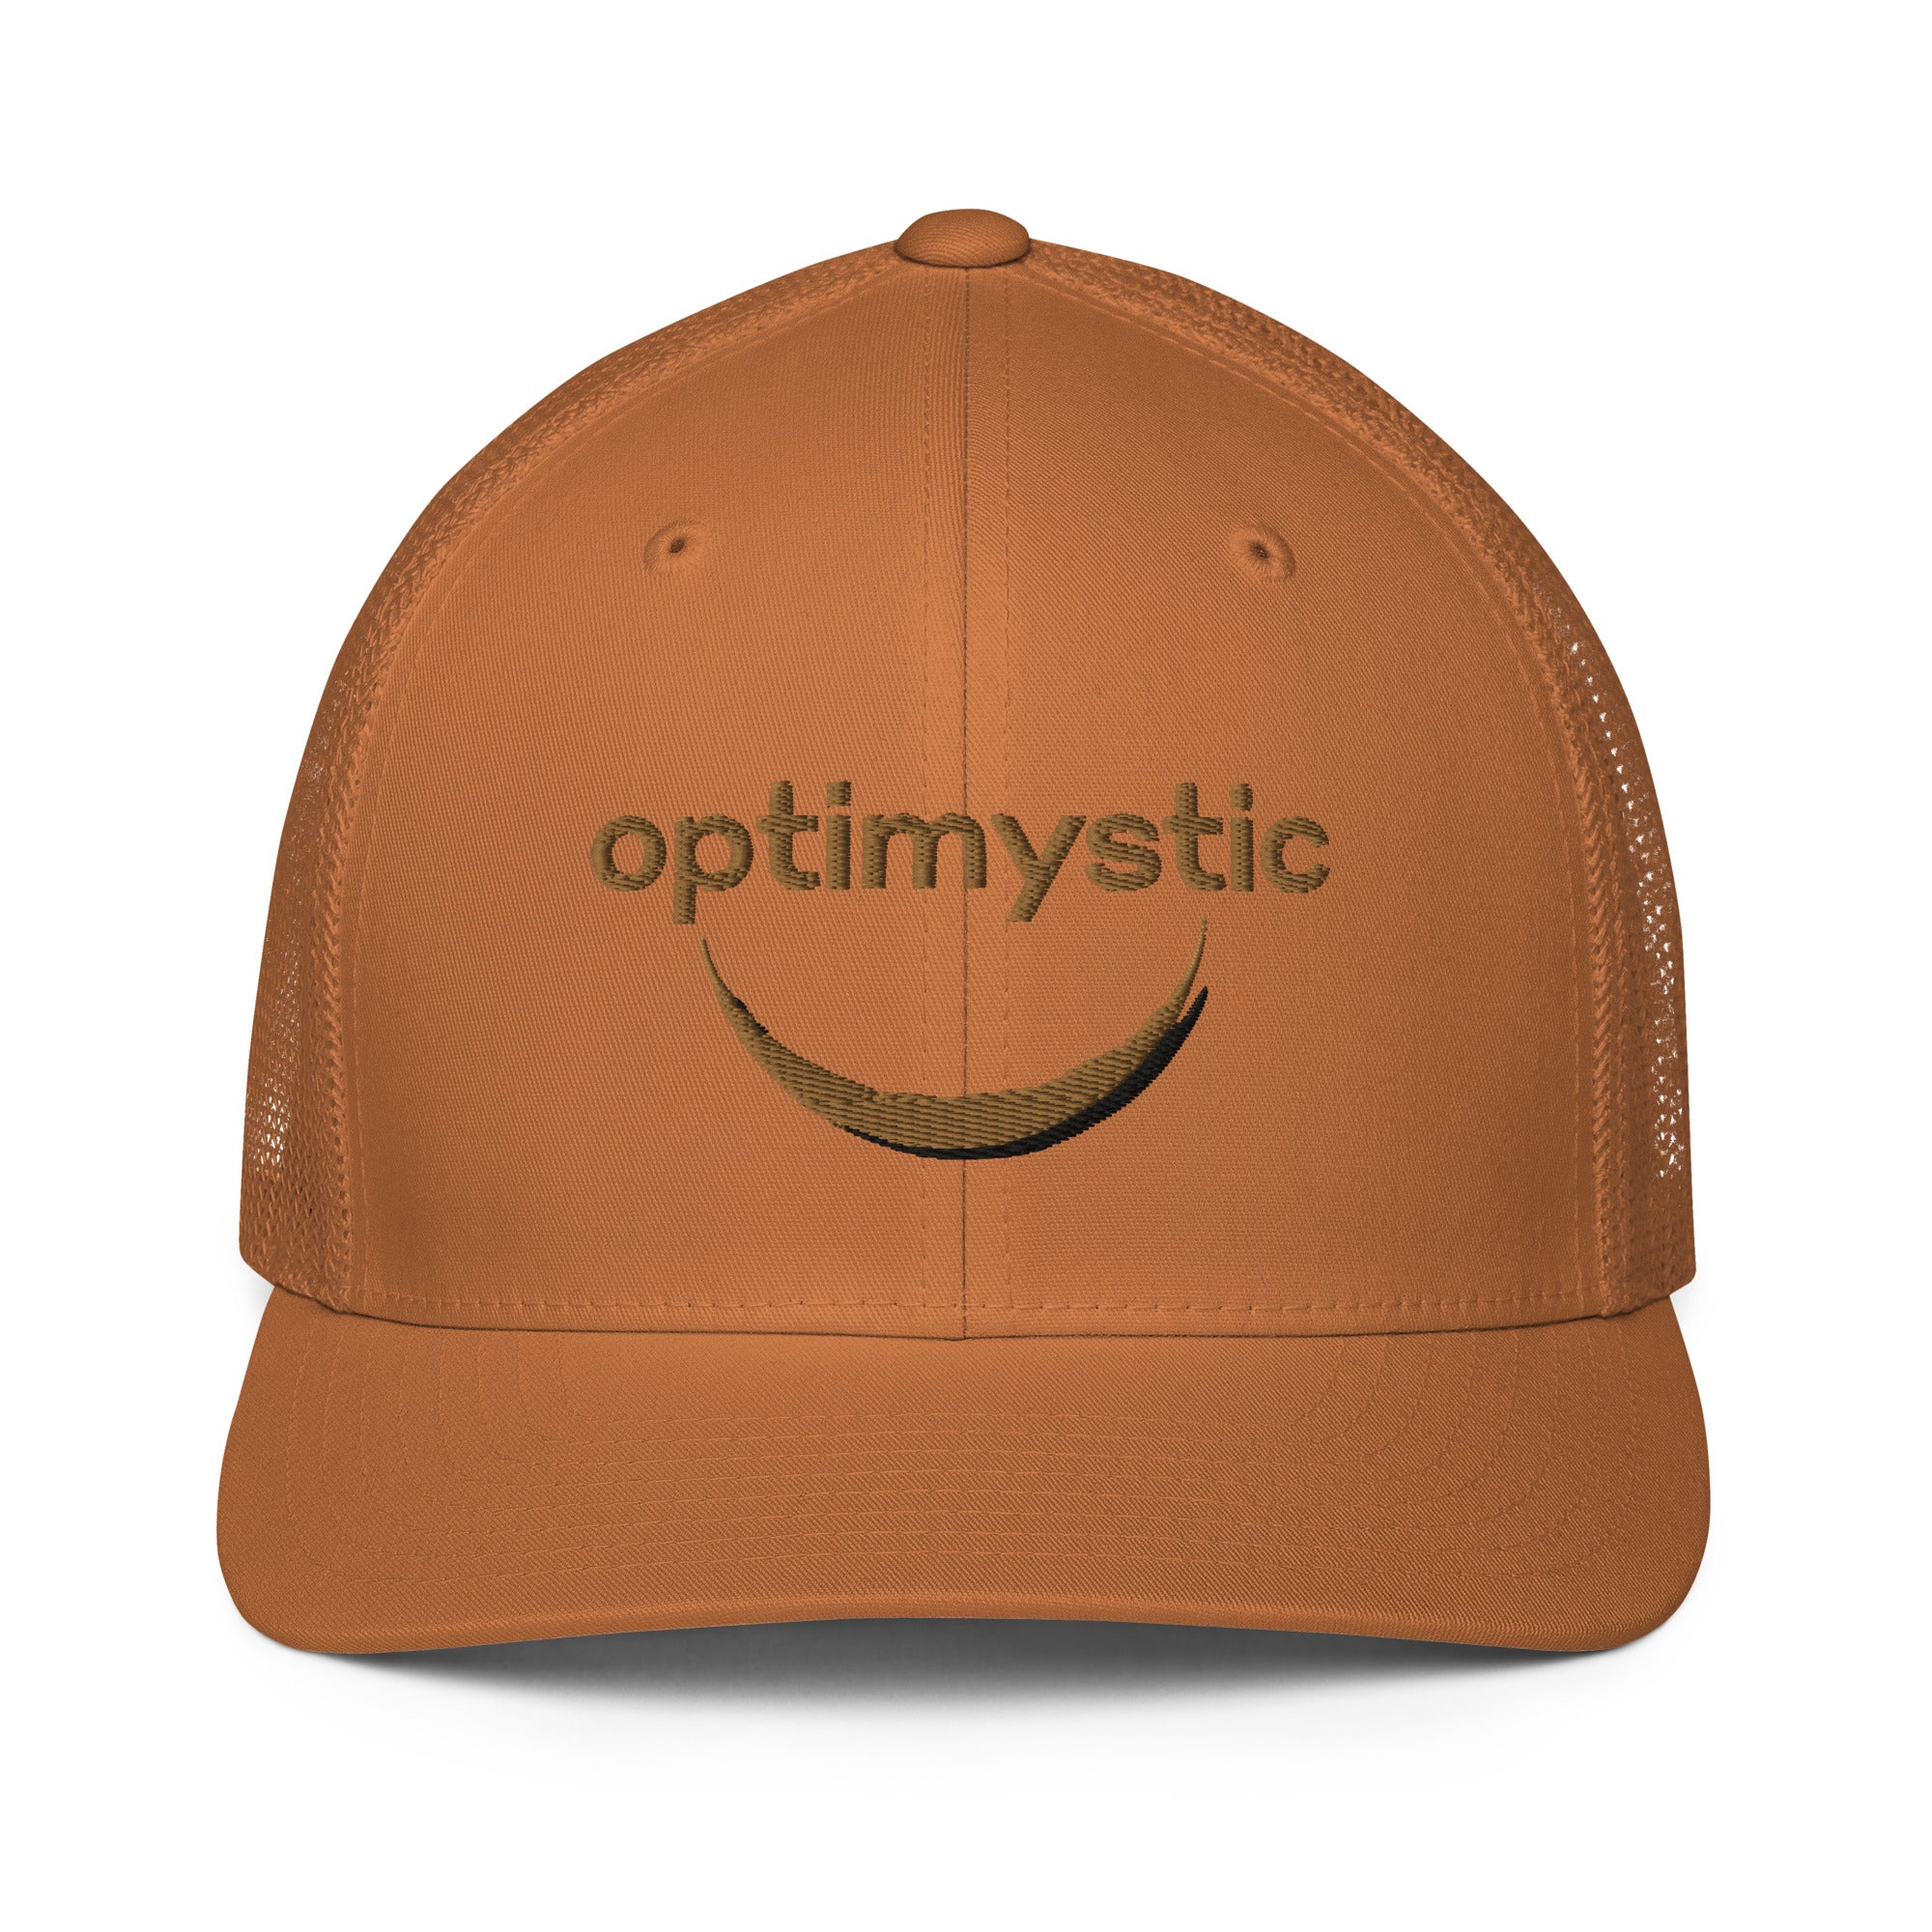 OptiMystic Trucker Hat